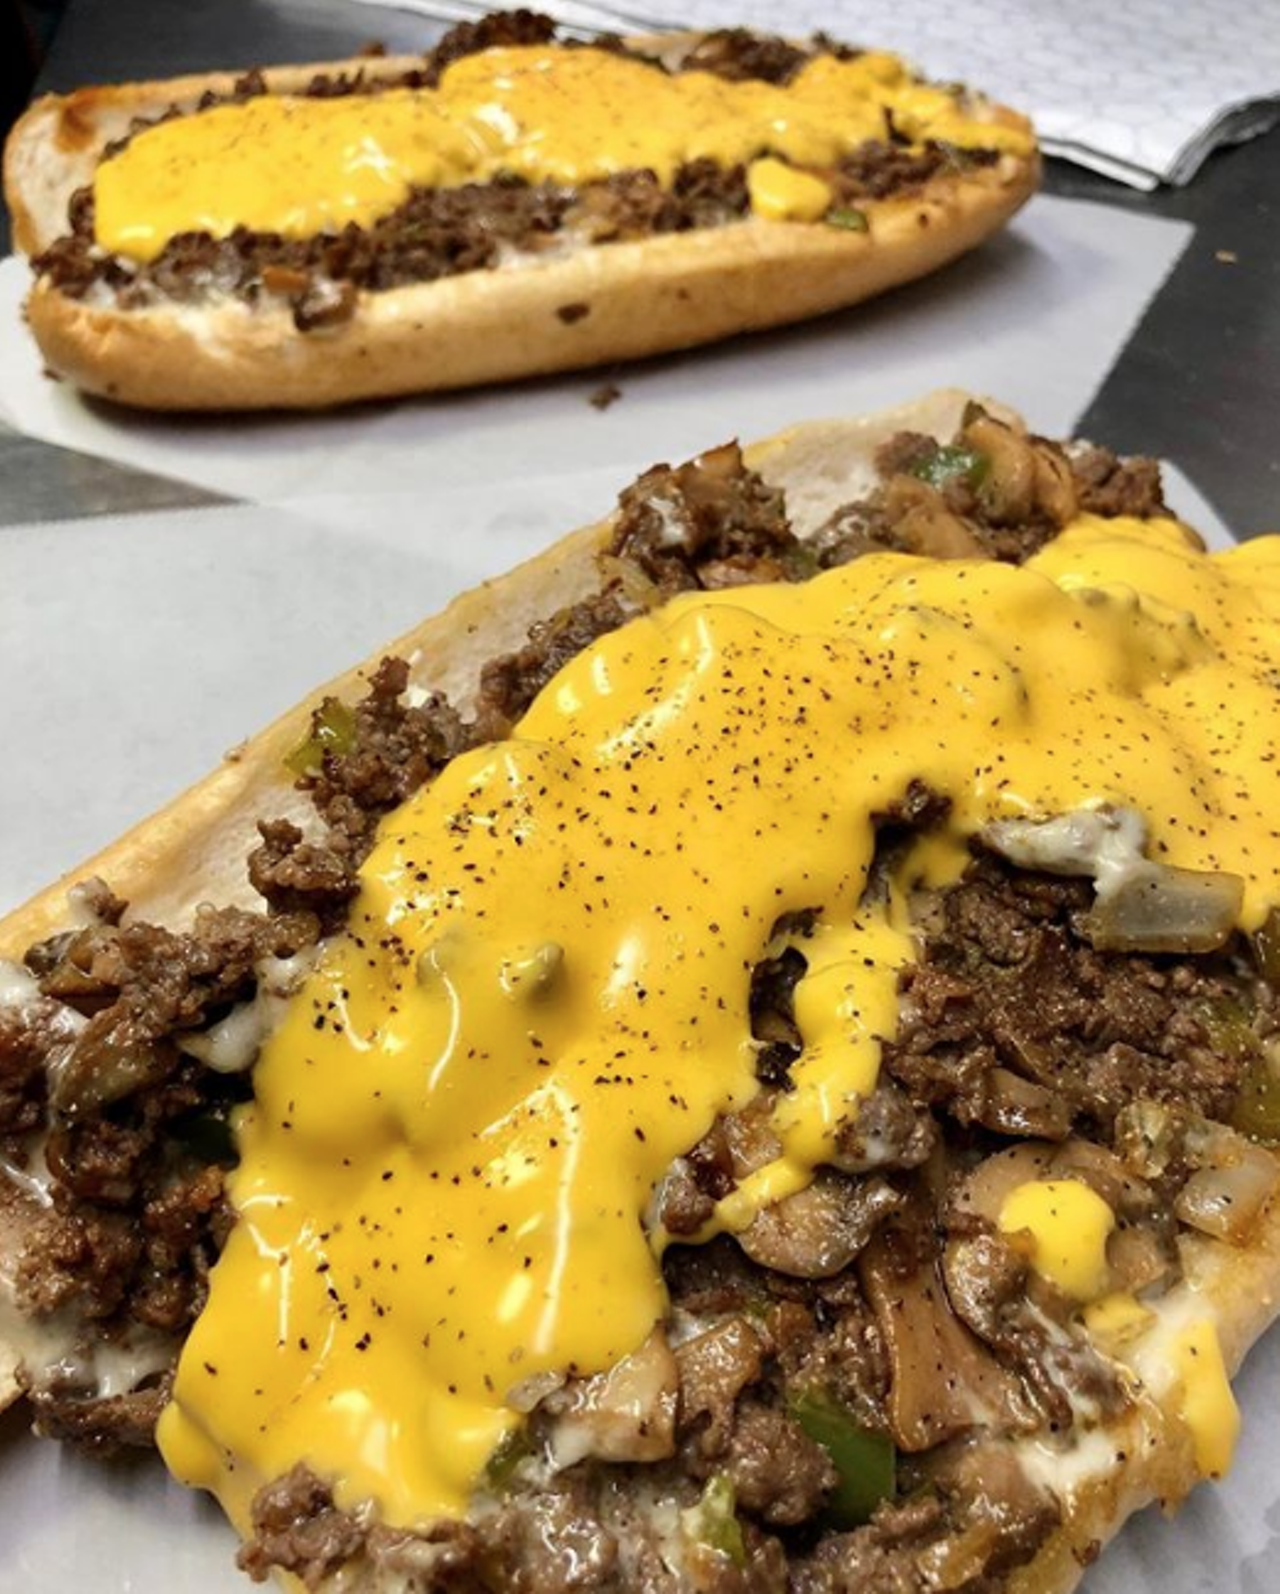 Best Food Truck
Philly's Phamous Cheesesteaks, 2301 San Pedro Ave, (210) 621-8908, facebook.com/PhillysPhamousItalianIce
Photo via Instagram / phillys_phamous